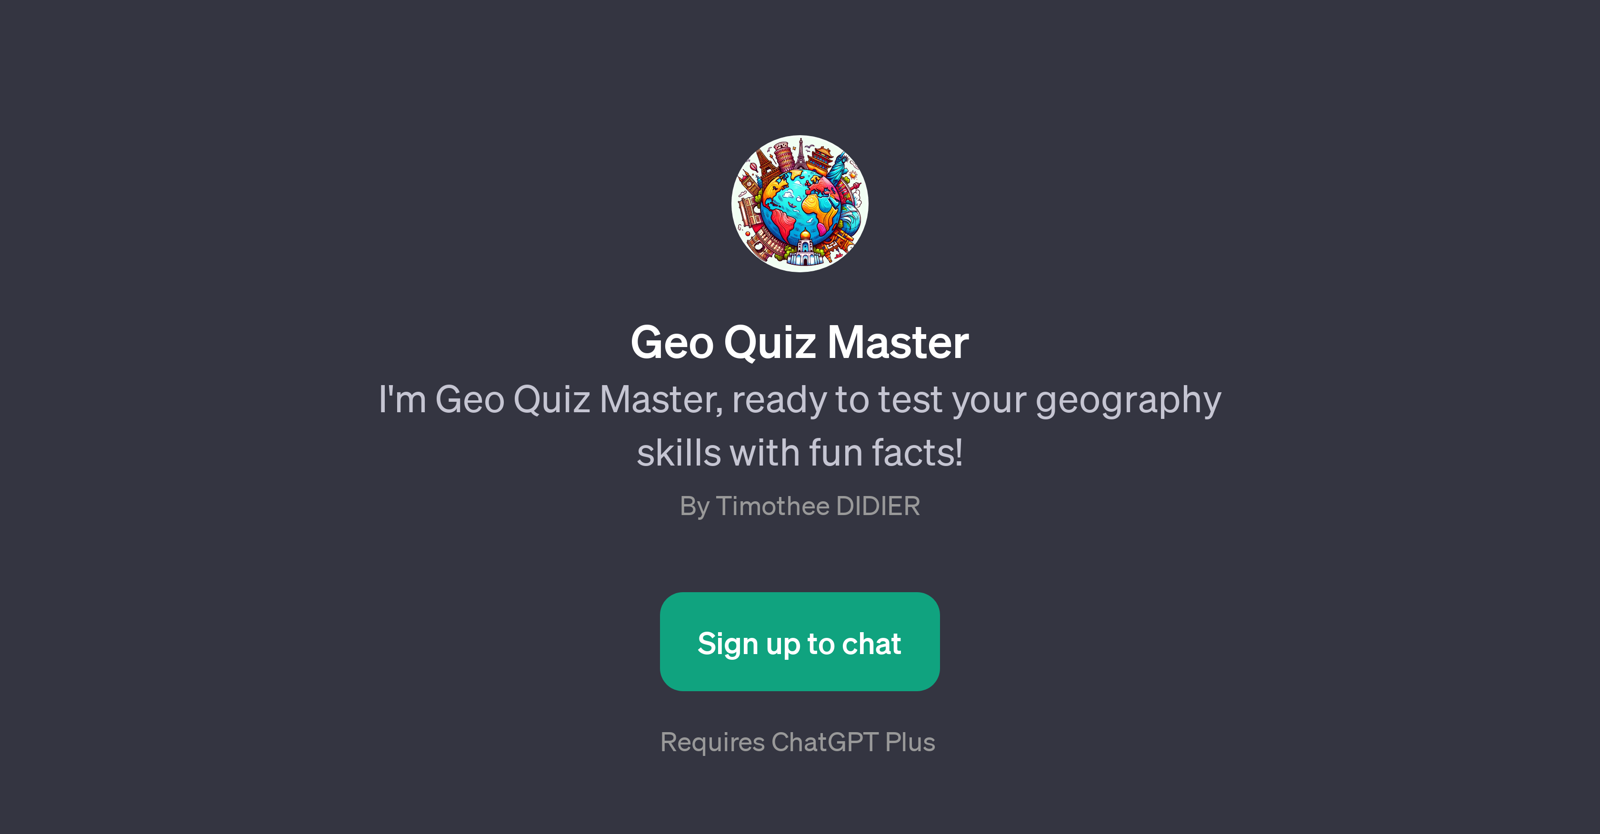 Geo Quiz Master website